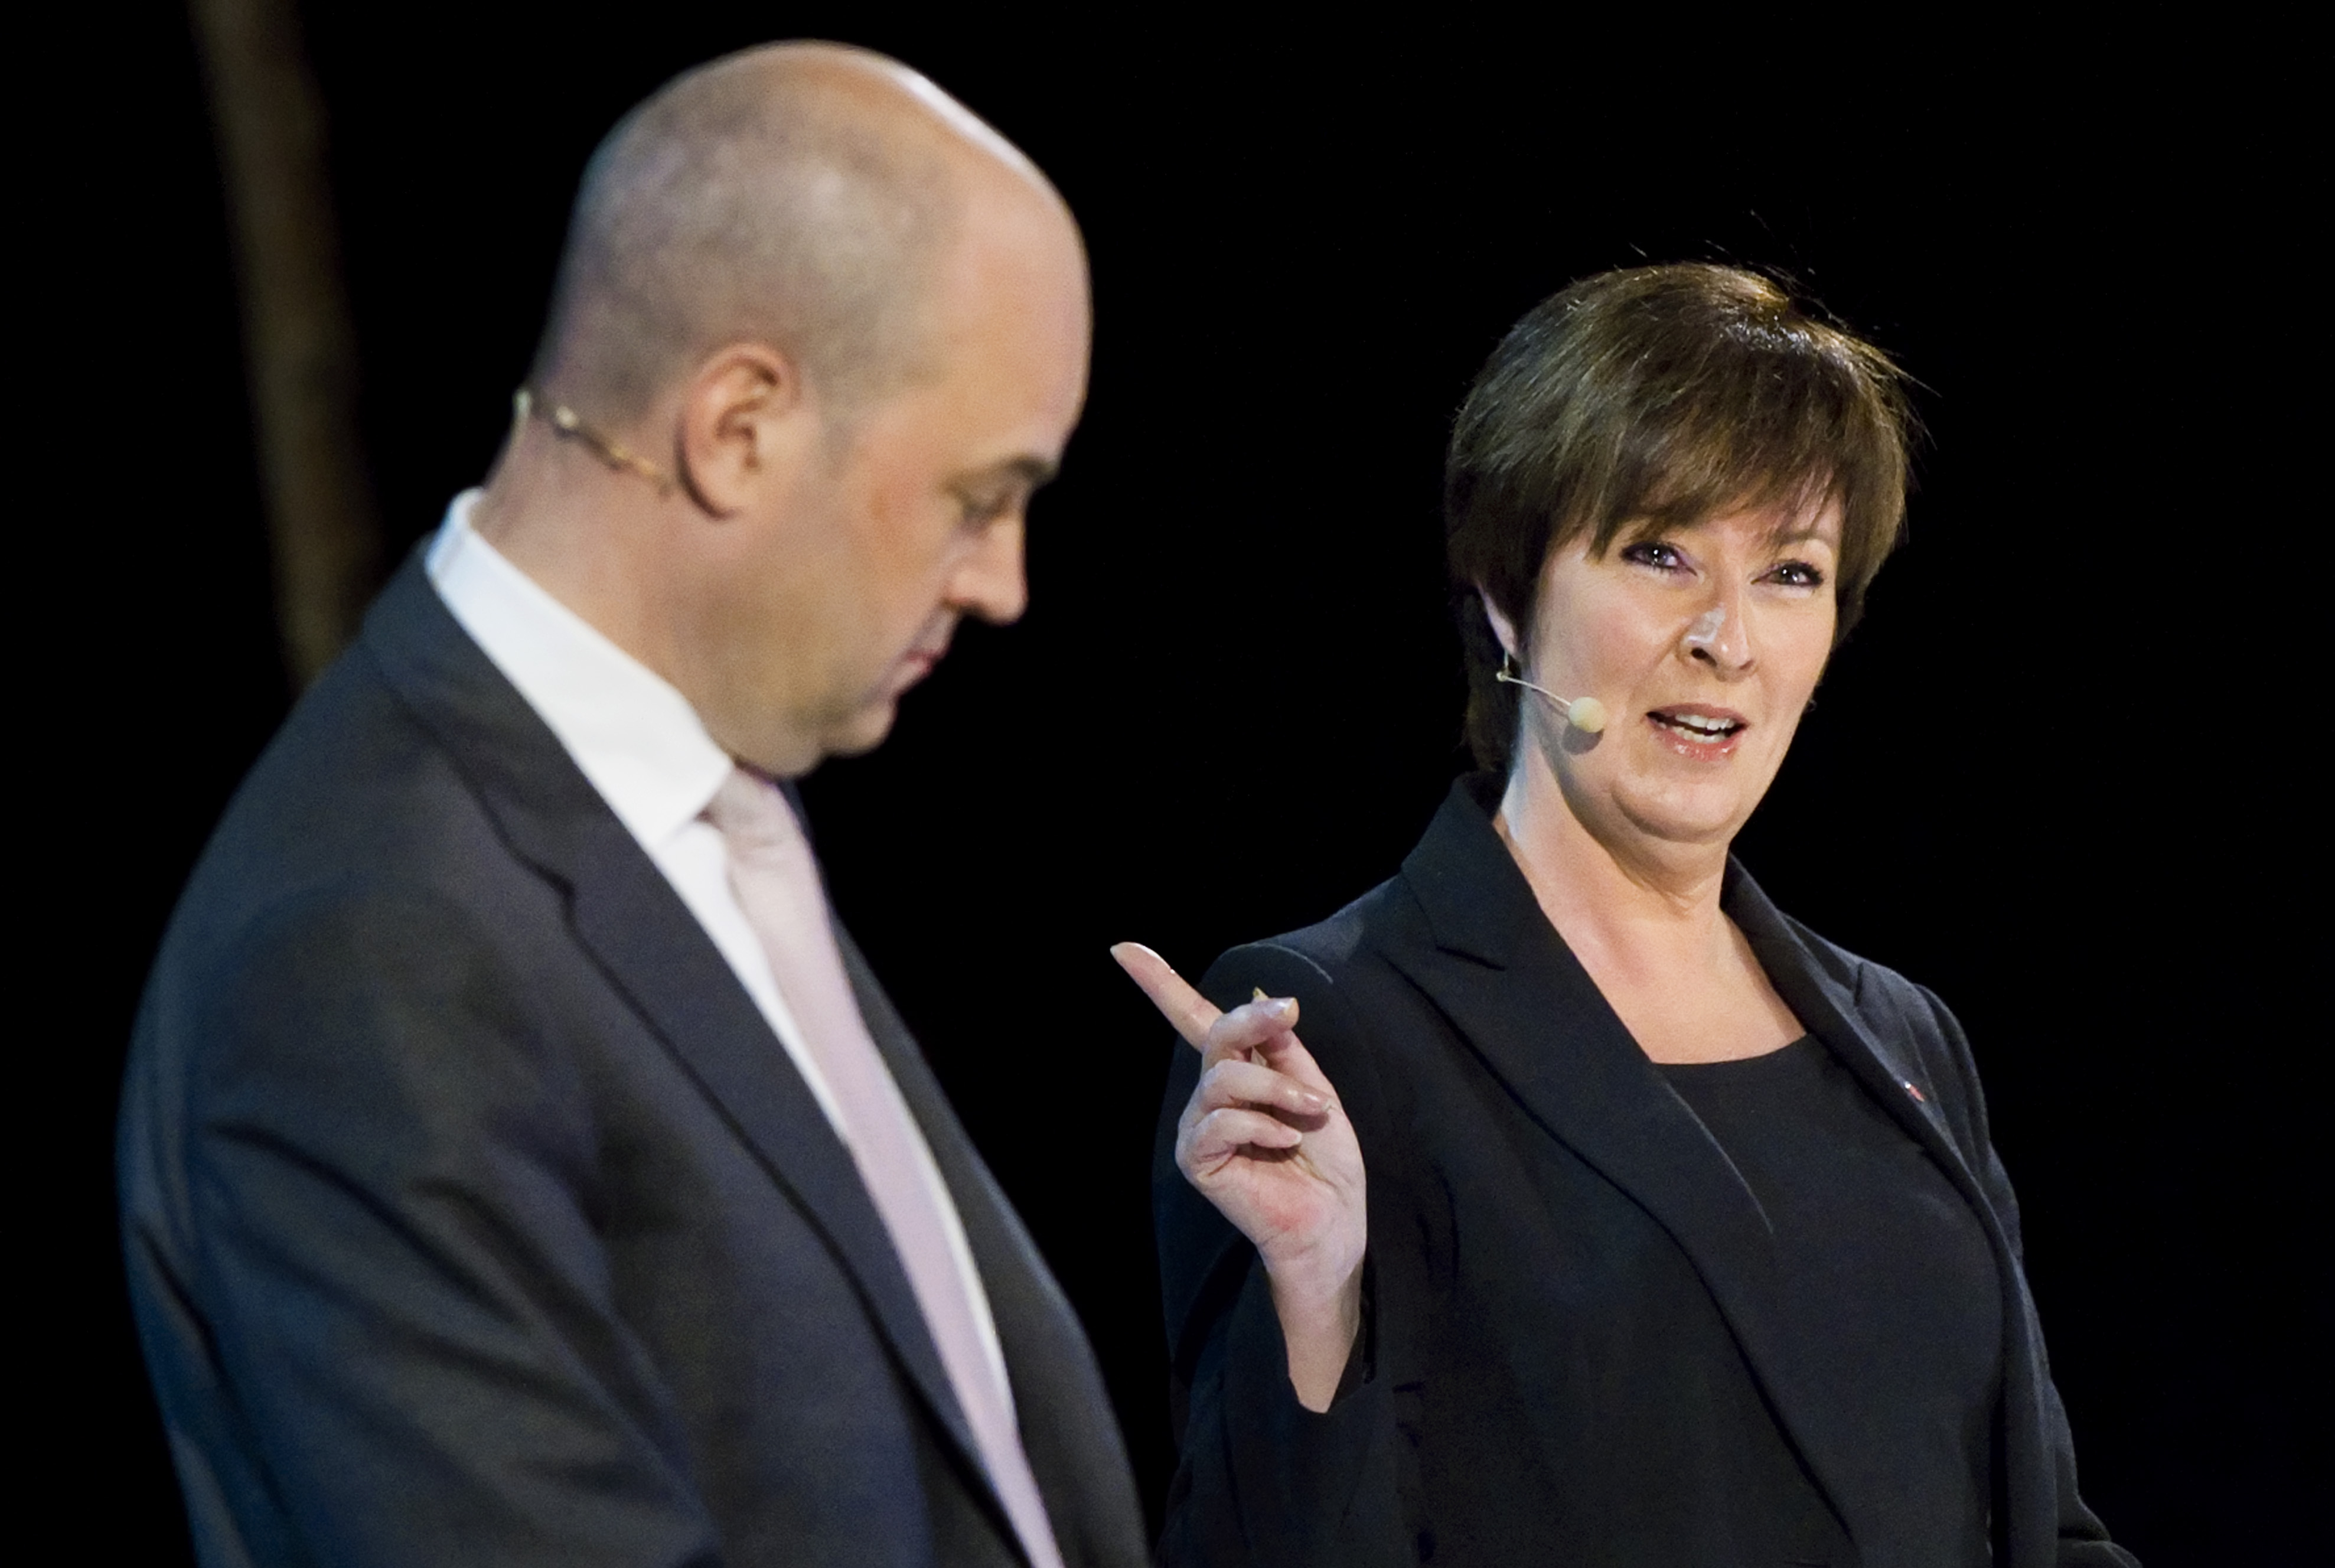 Riksdagsvalet 2010, Partiledardebatt, Fredrik Reinfeldt, Mona Sahlin